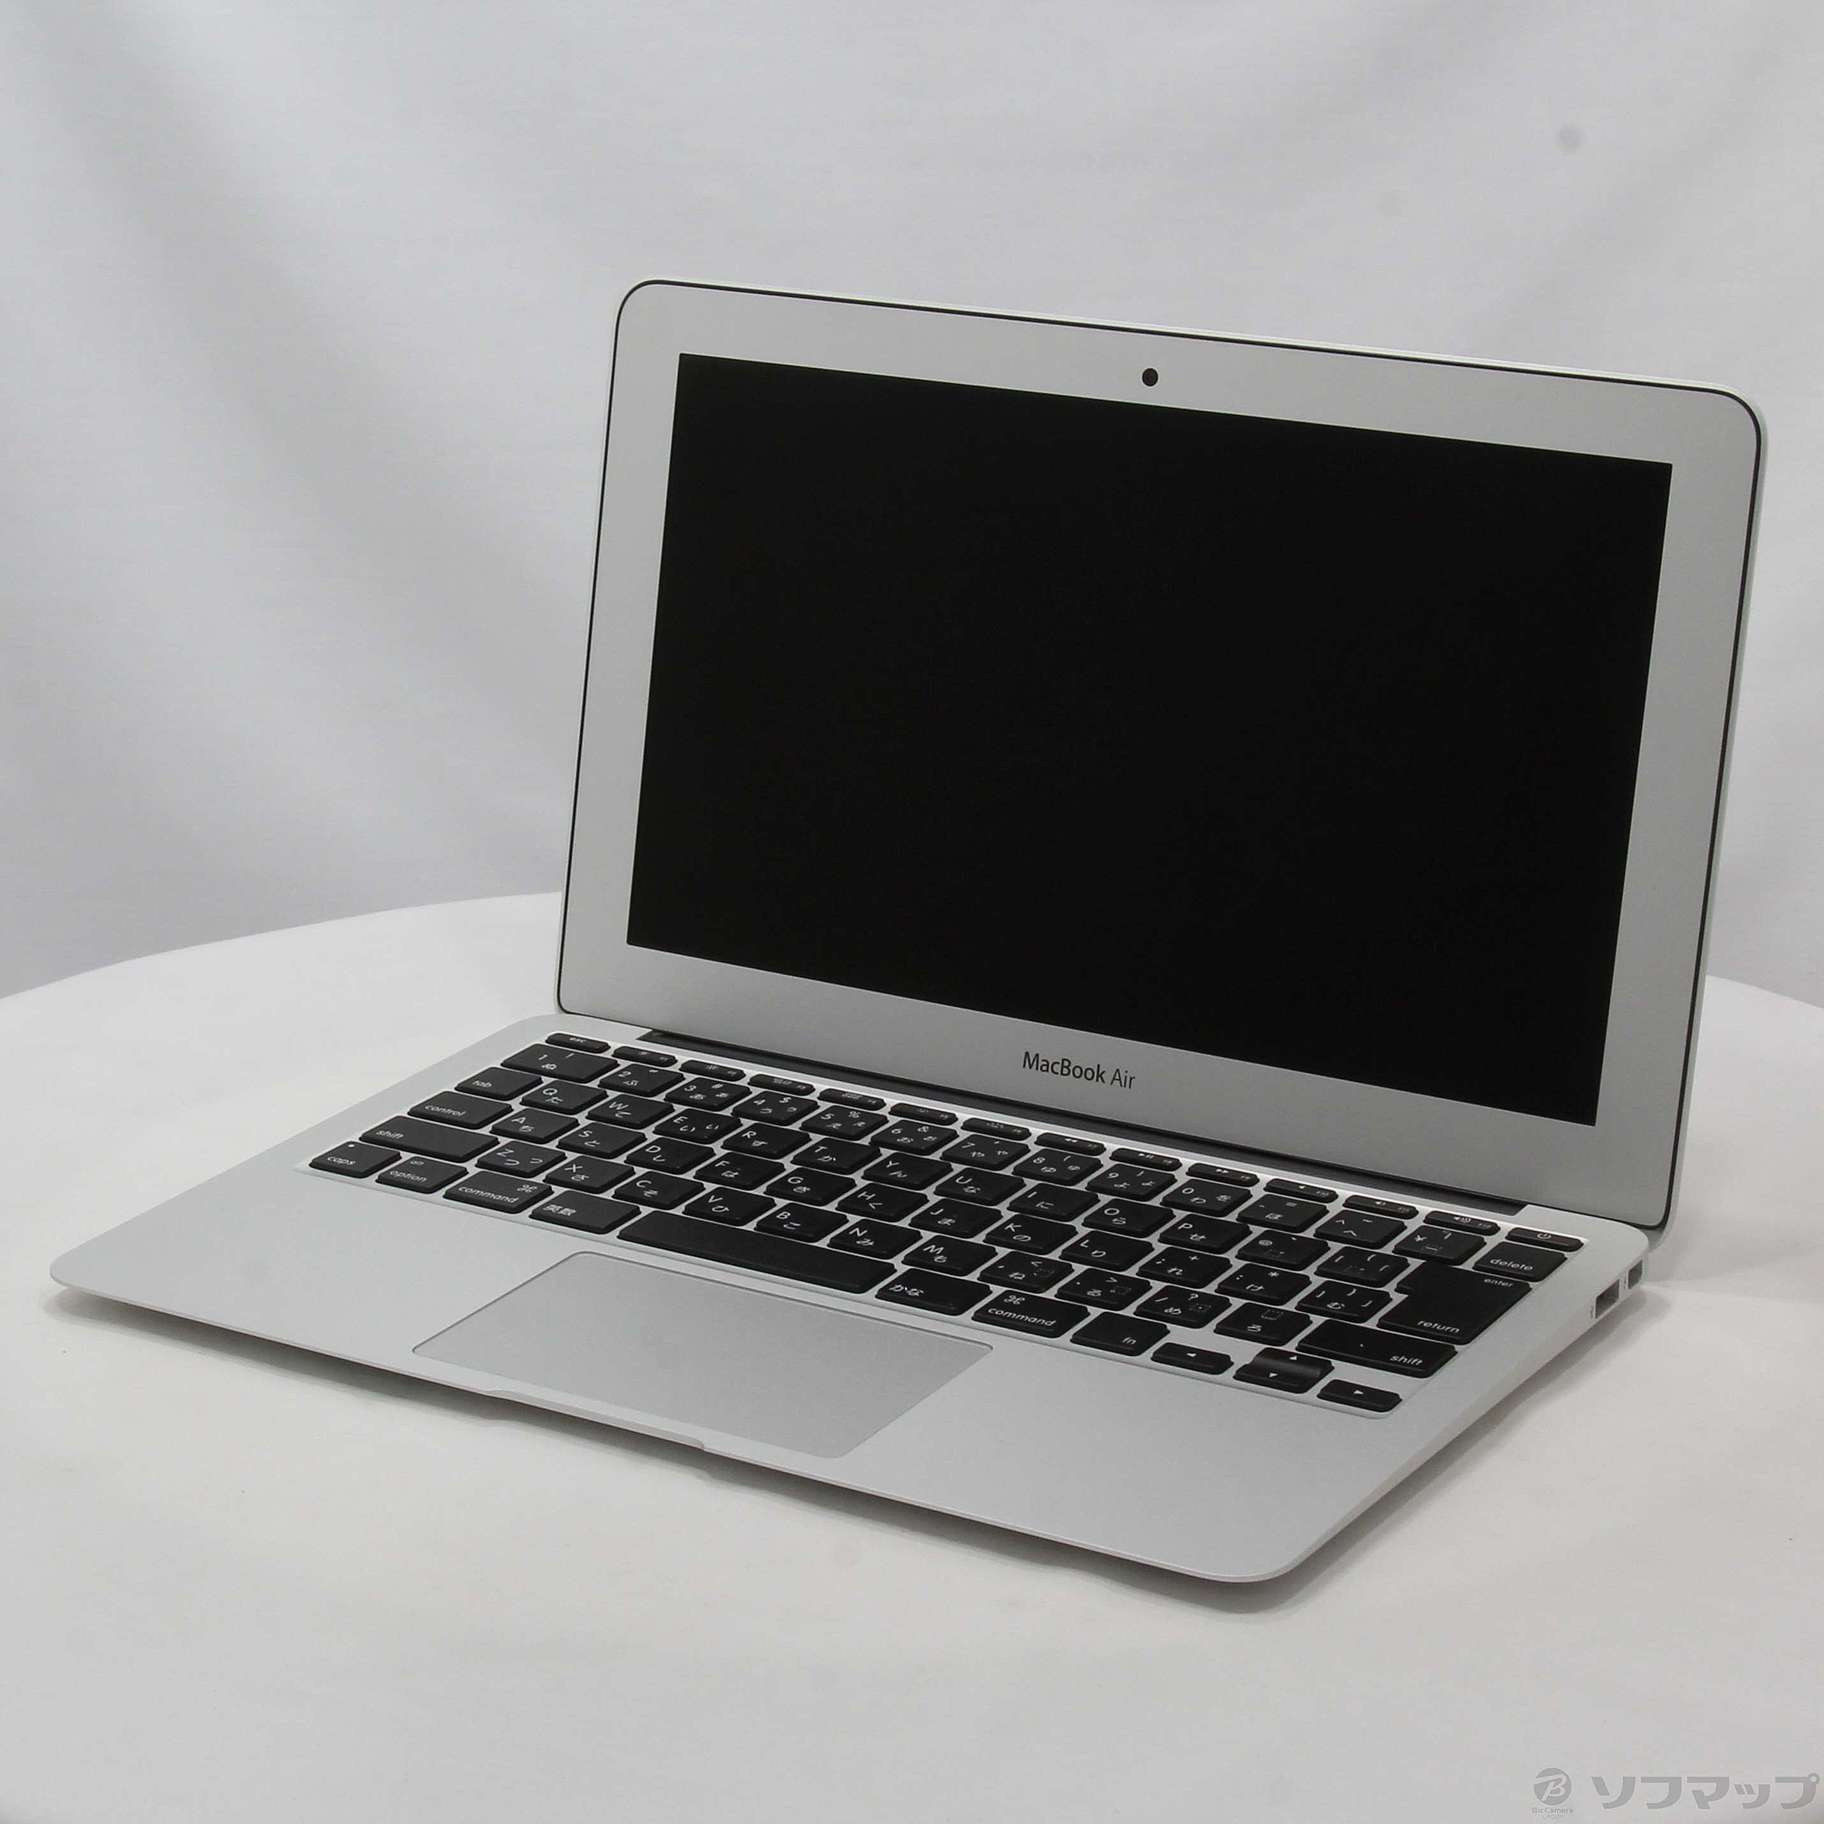 Apple(アップル) MacBook Air 11.6-inch Mid 2013 MD711J／A Core_i5